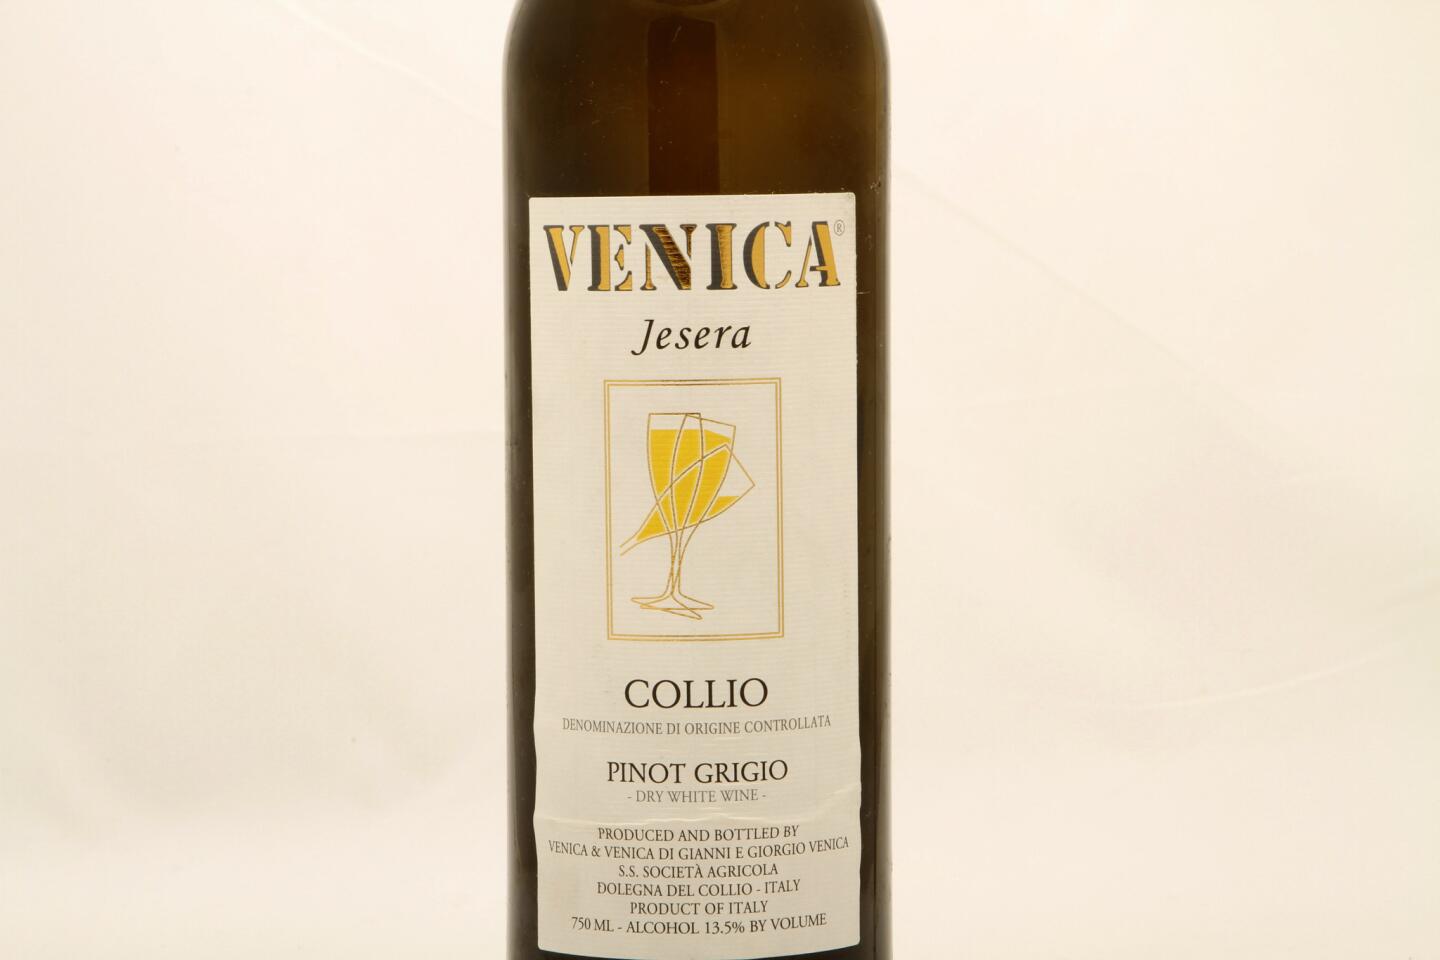 2013 Venica Pinot Grigio 'Jesera' Collio